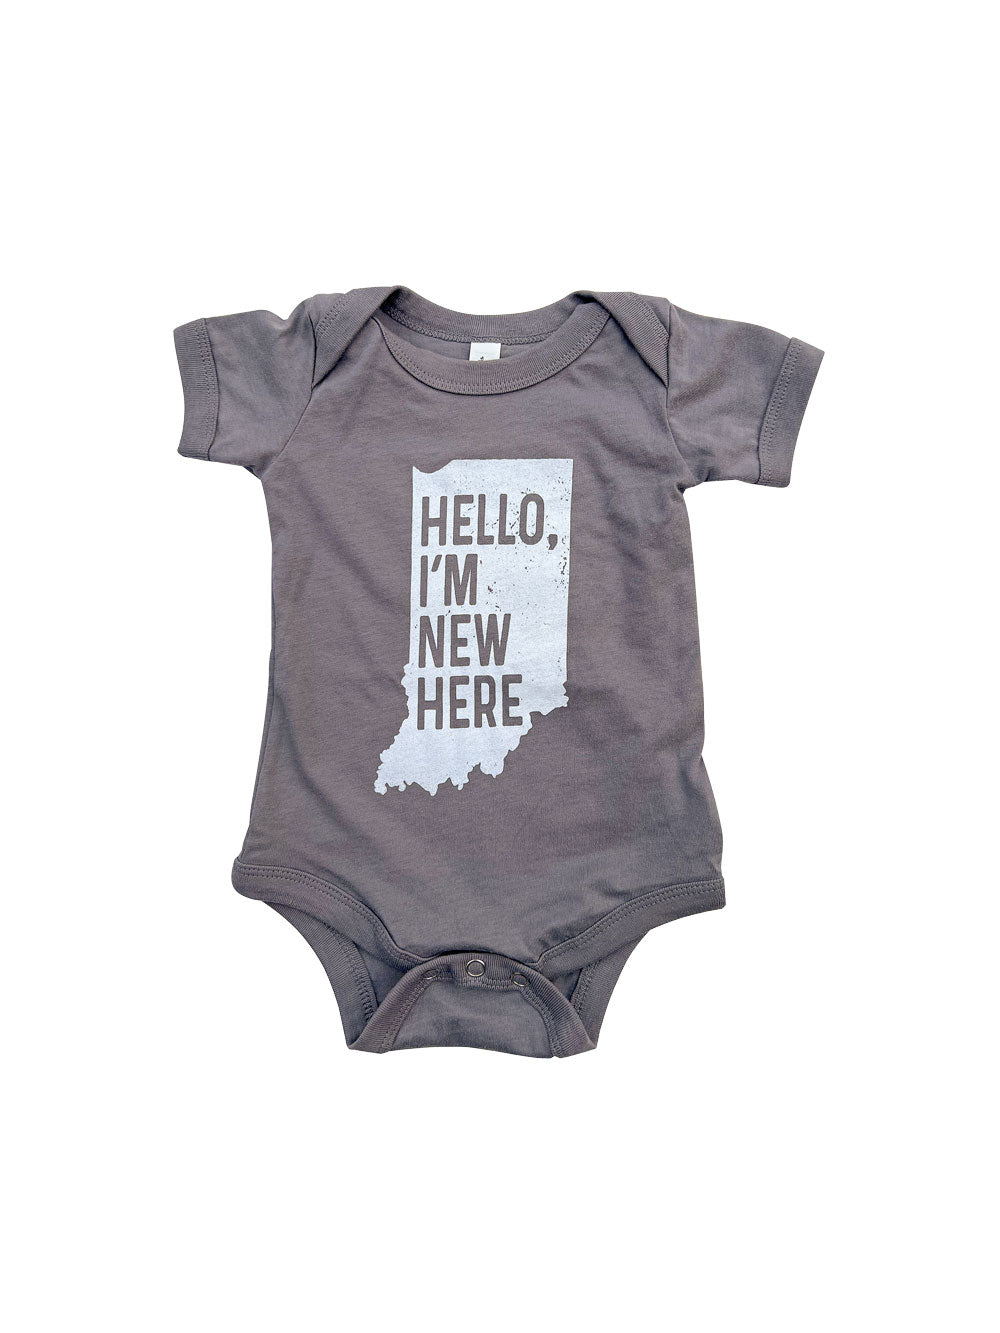 Hello, I'm New Here (Indiana) gray infant bodysuit